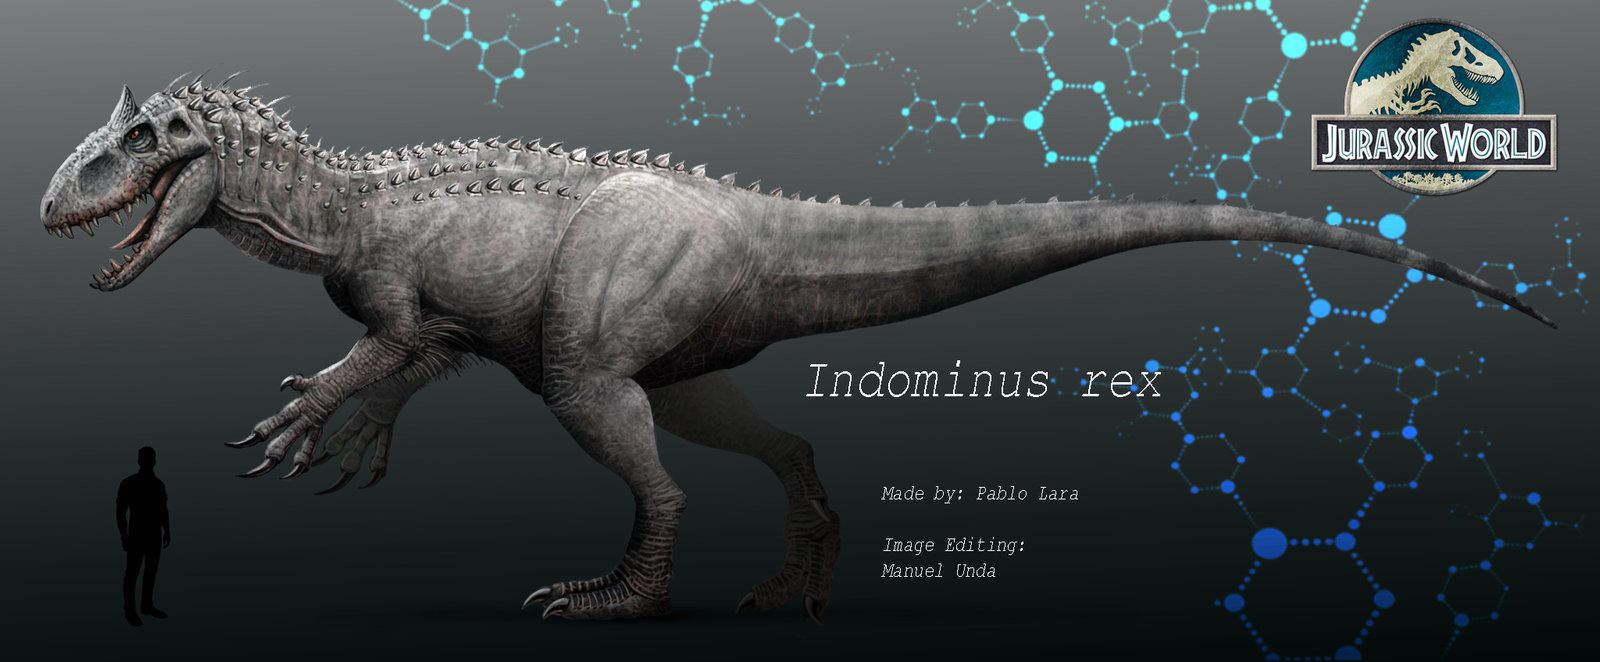 Free download Jurassic World Indominus rex by MANUSAURIO [1600x662] for your Desktop, Mobile & Tablet. Explore Jurassic World T Rex Wallpaper. Jurassic World T Rex Wallpaper, Jurassic Park T